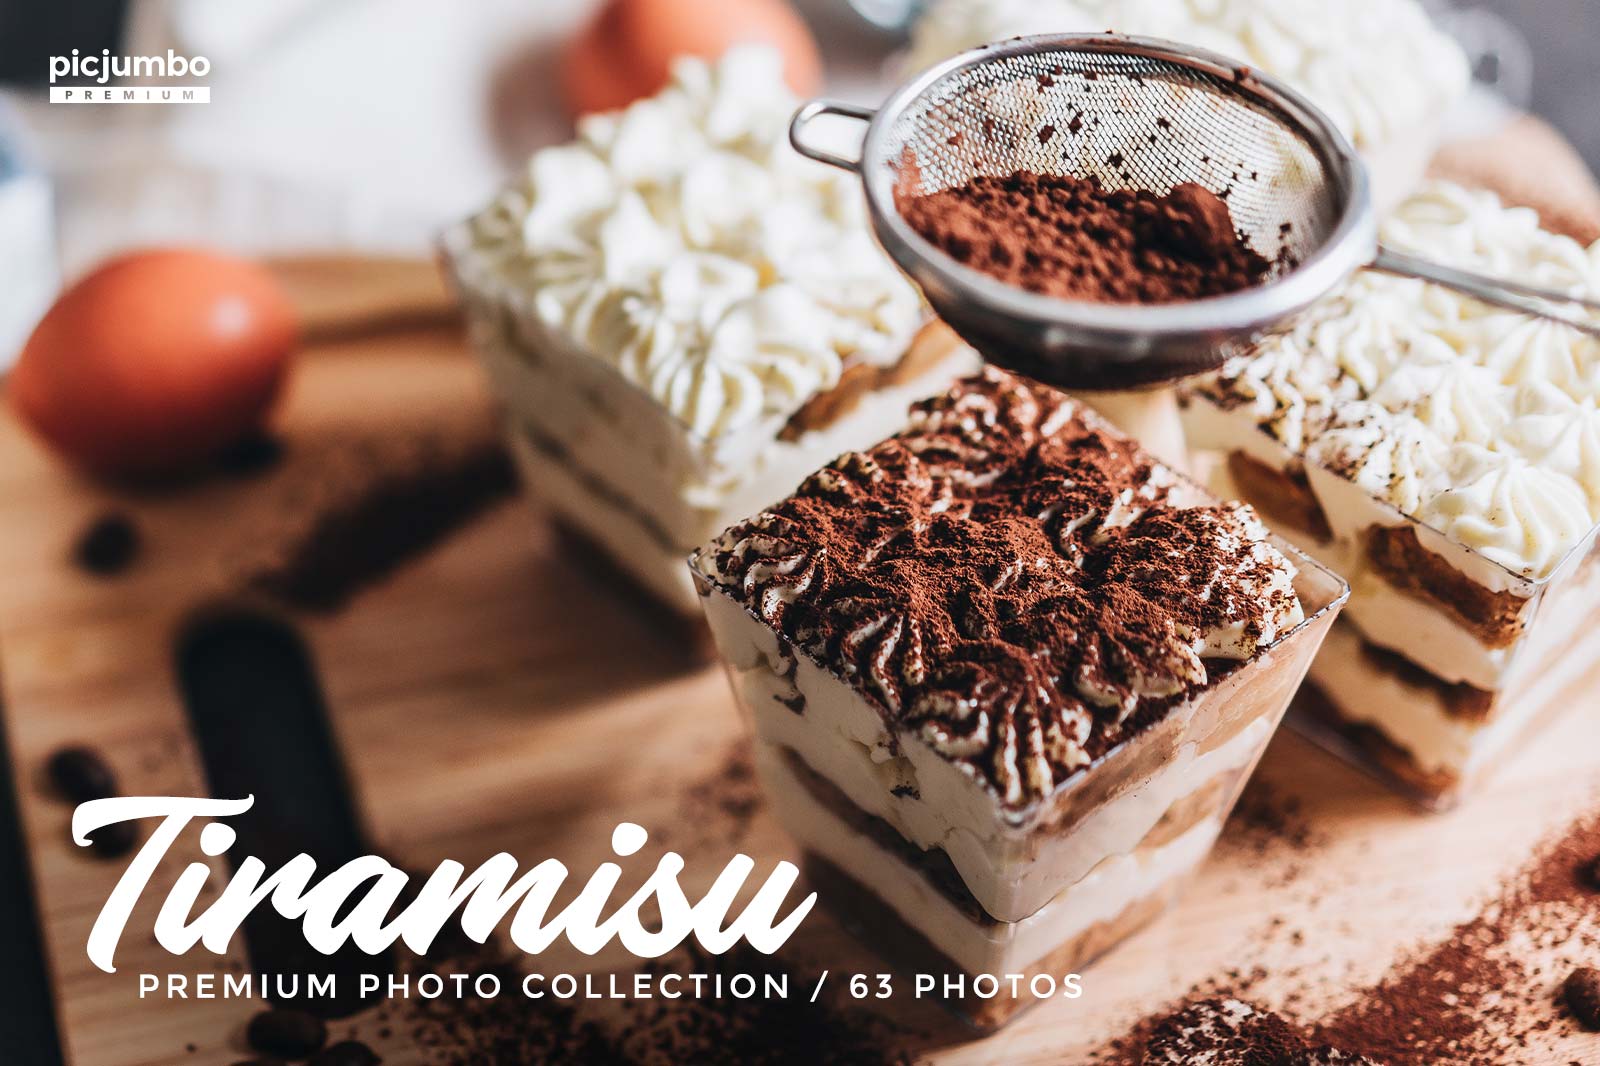 Download hi-res stock photos from our Tiramisu PREMIUM Collection!